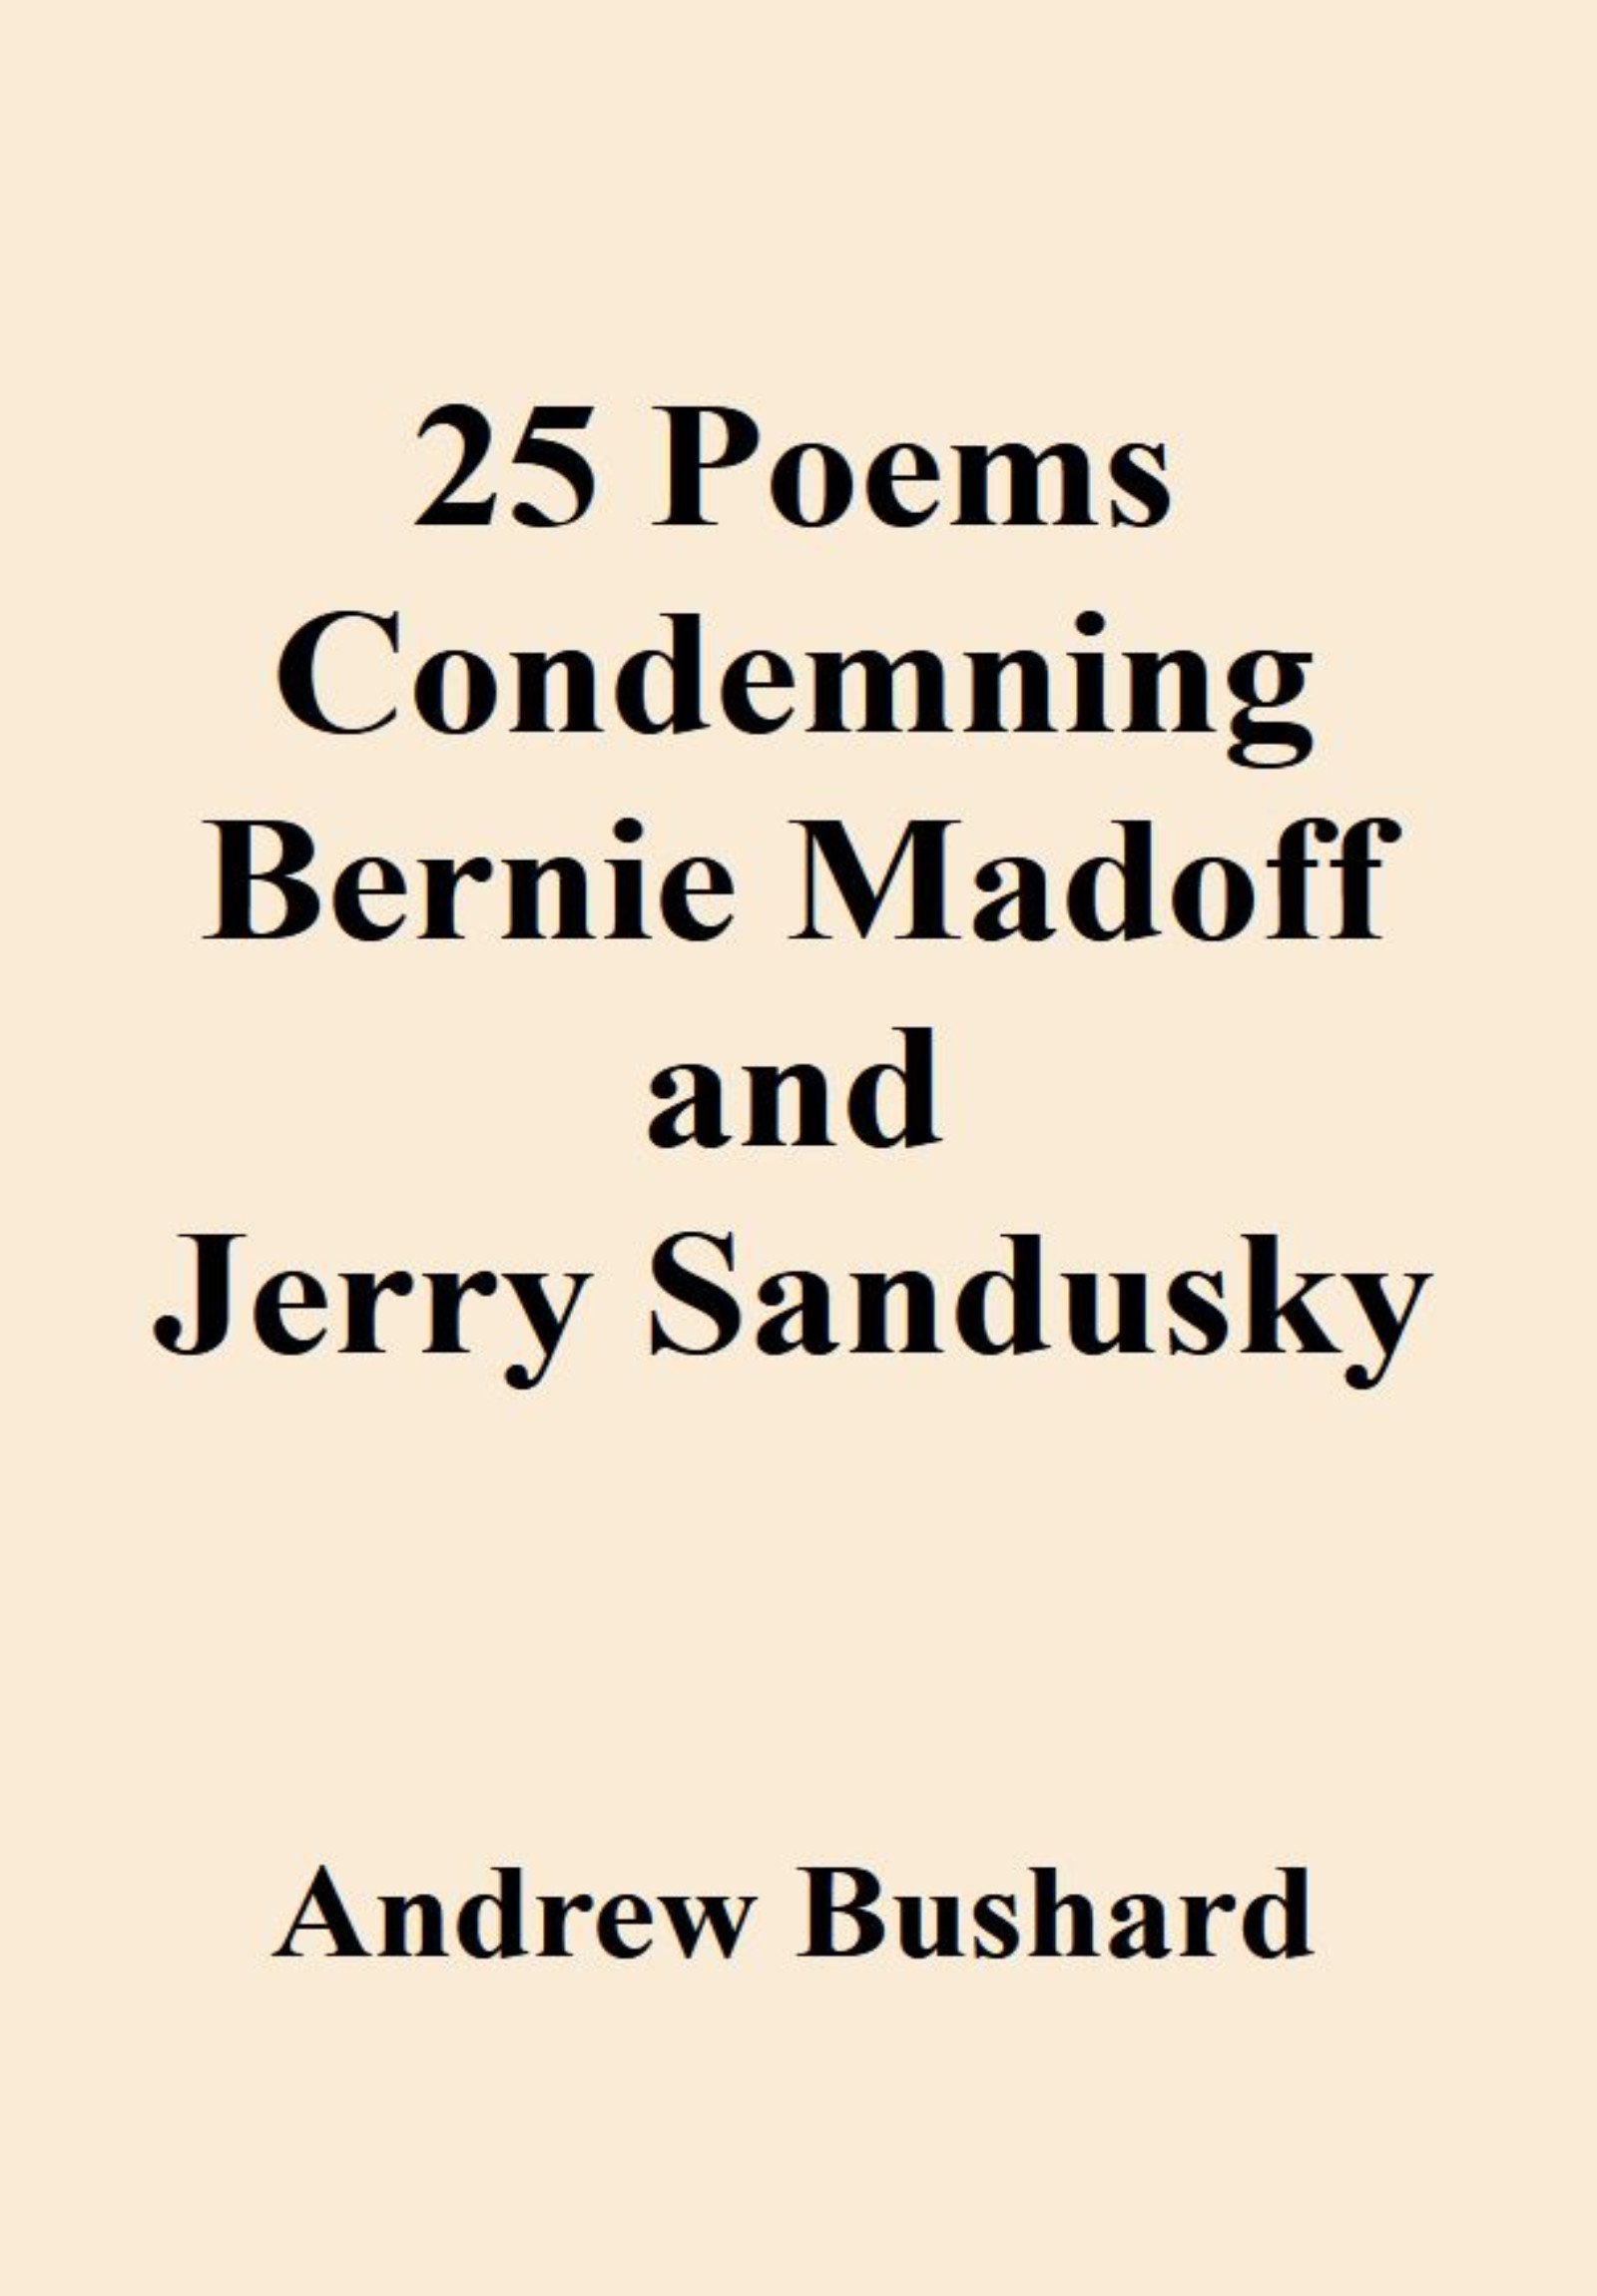 25 Poems Condemning Bernie Madoff and Jerry Sandusky